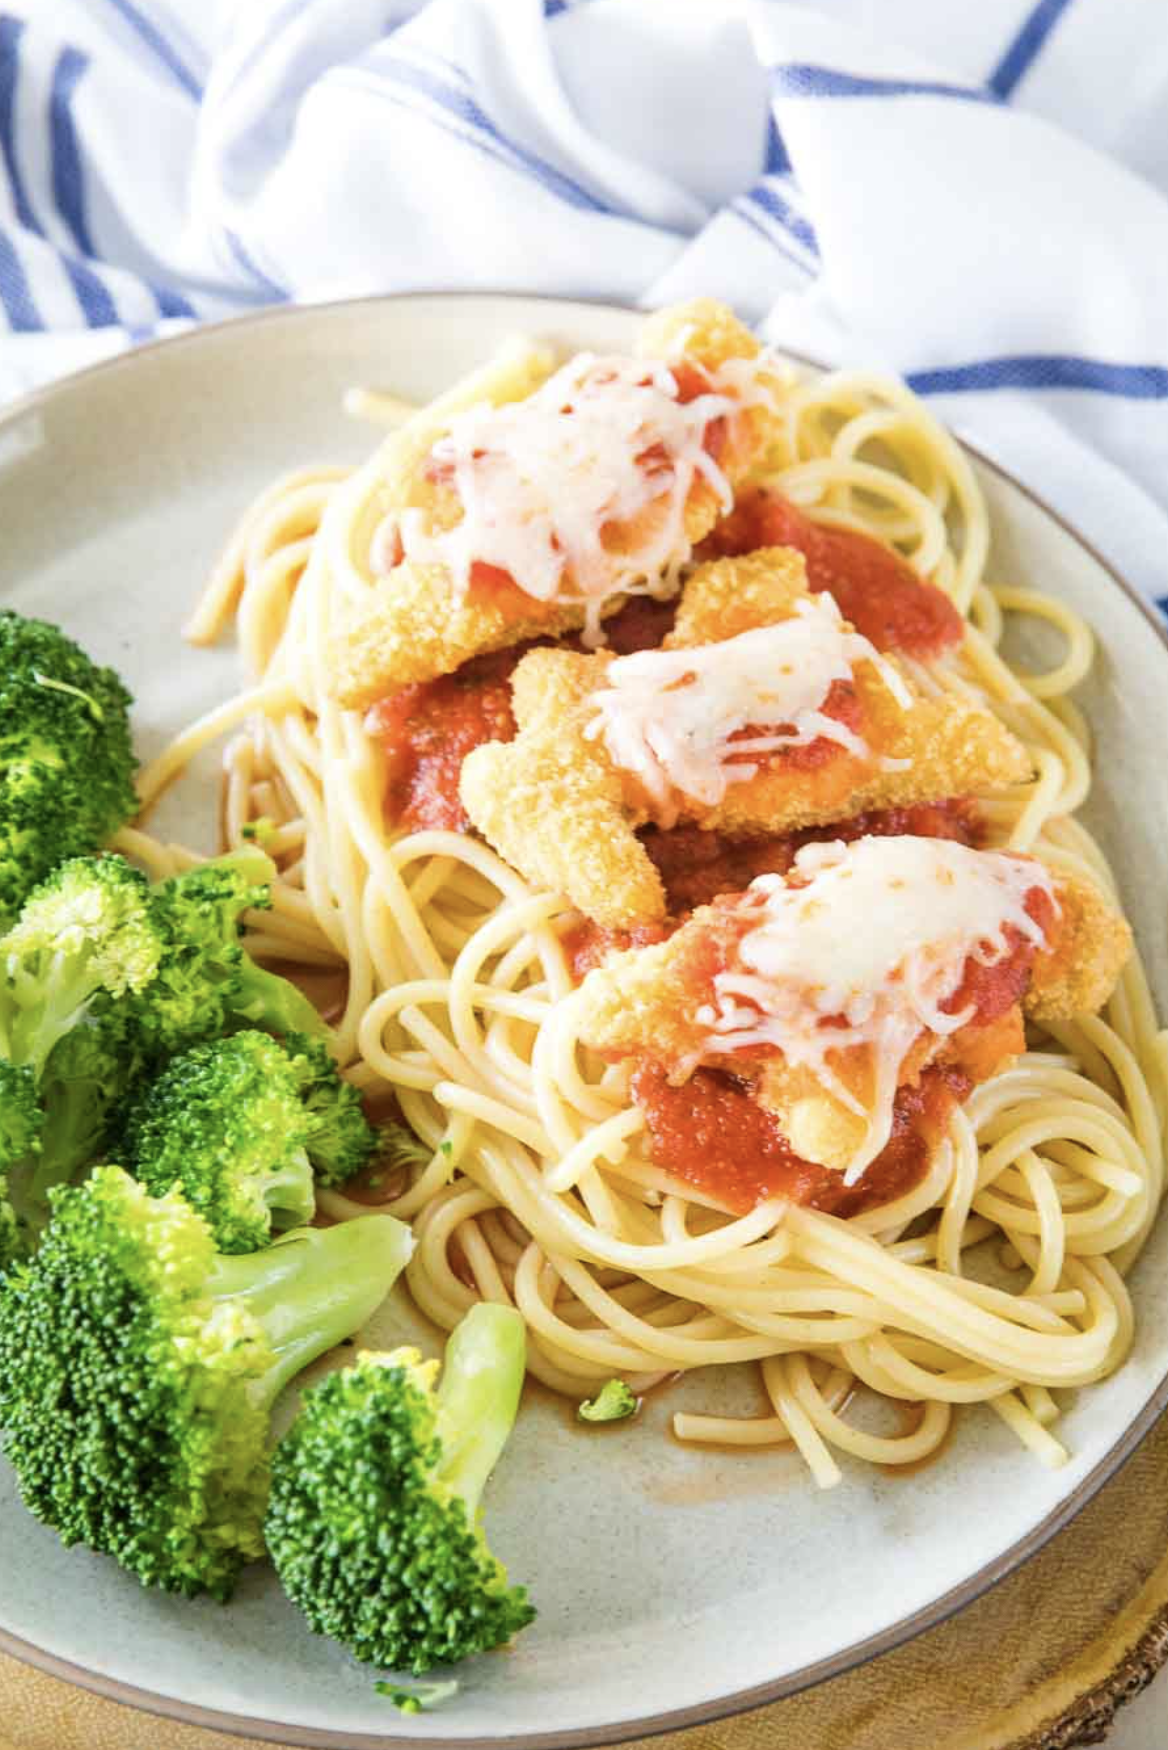 dino buddies chicken parmesan on pasta with broccoli